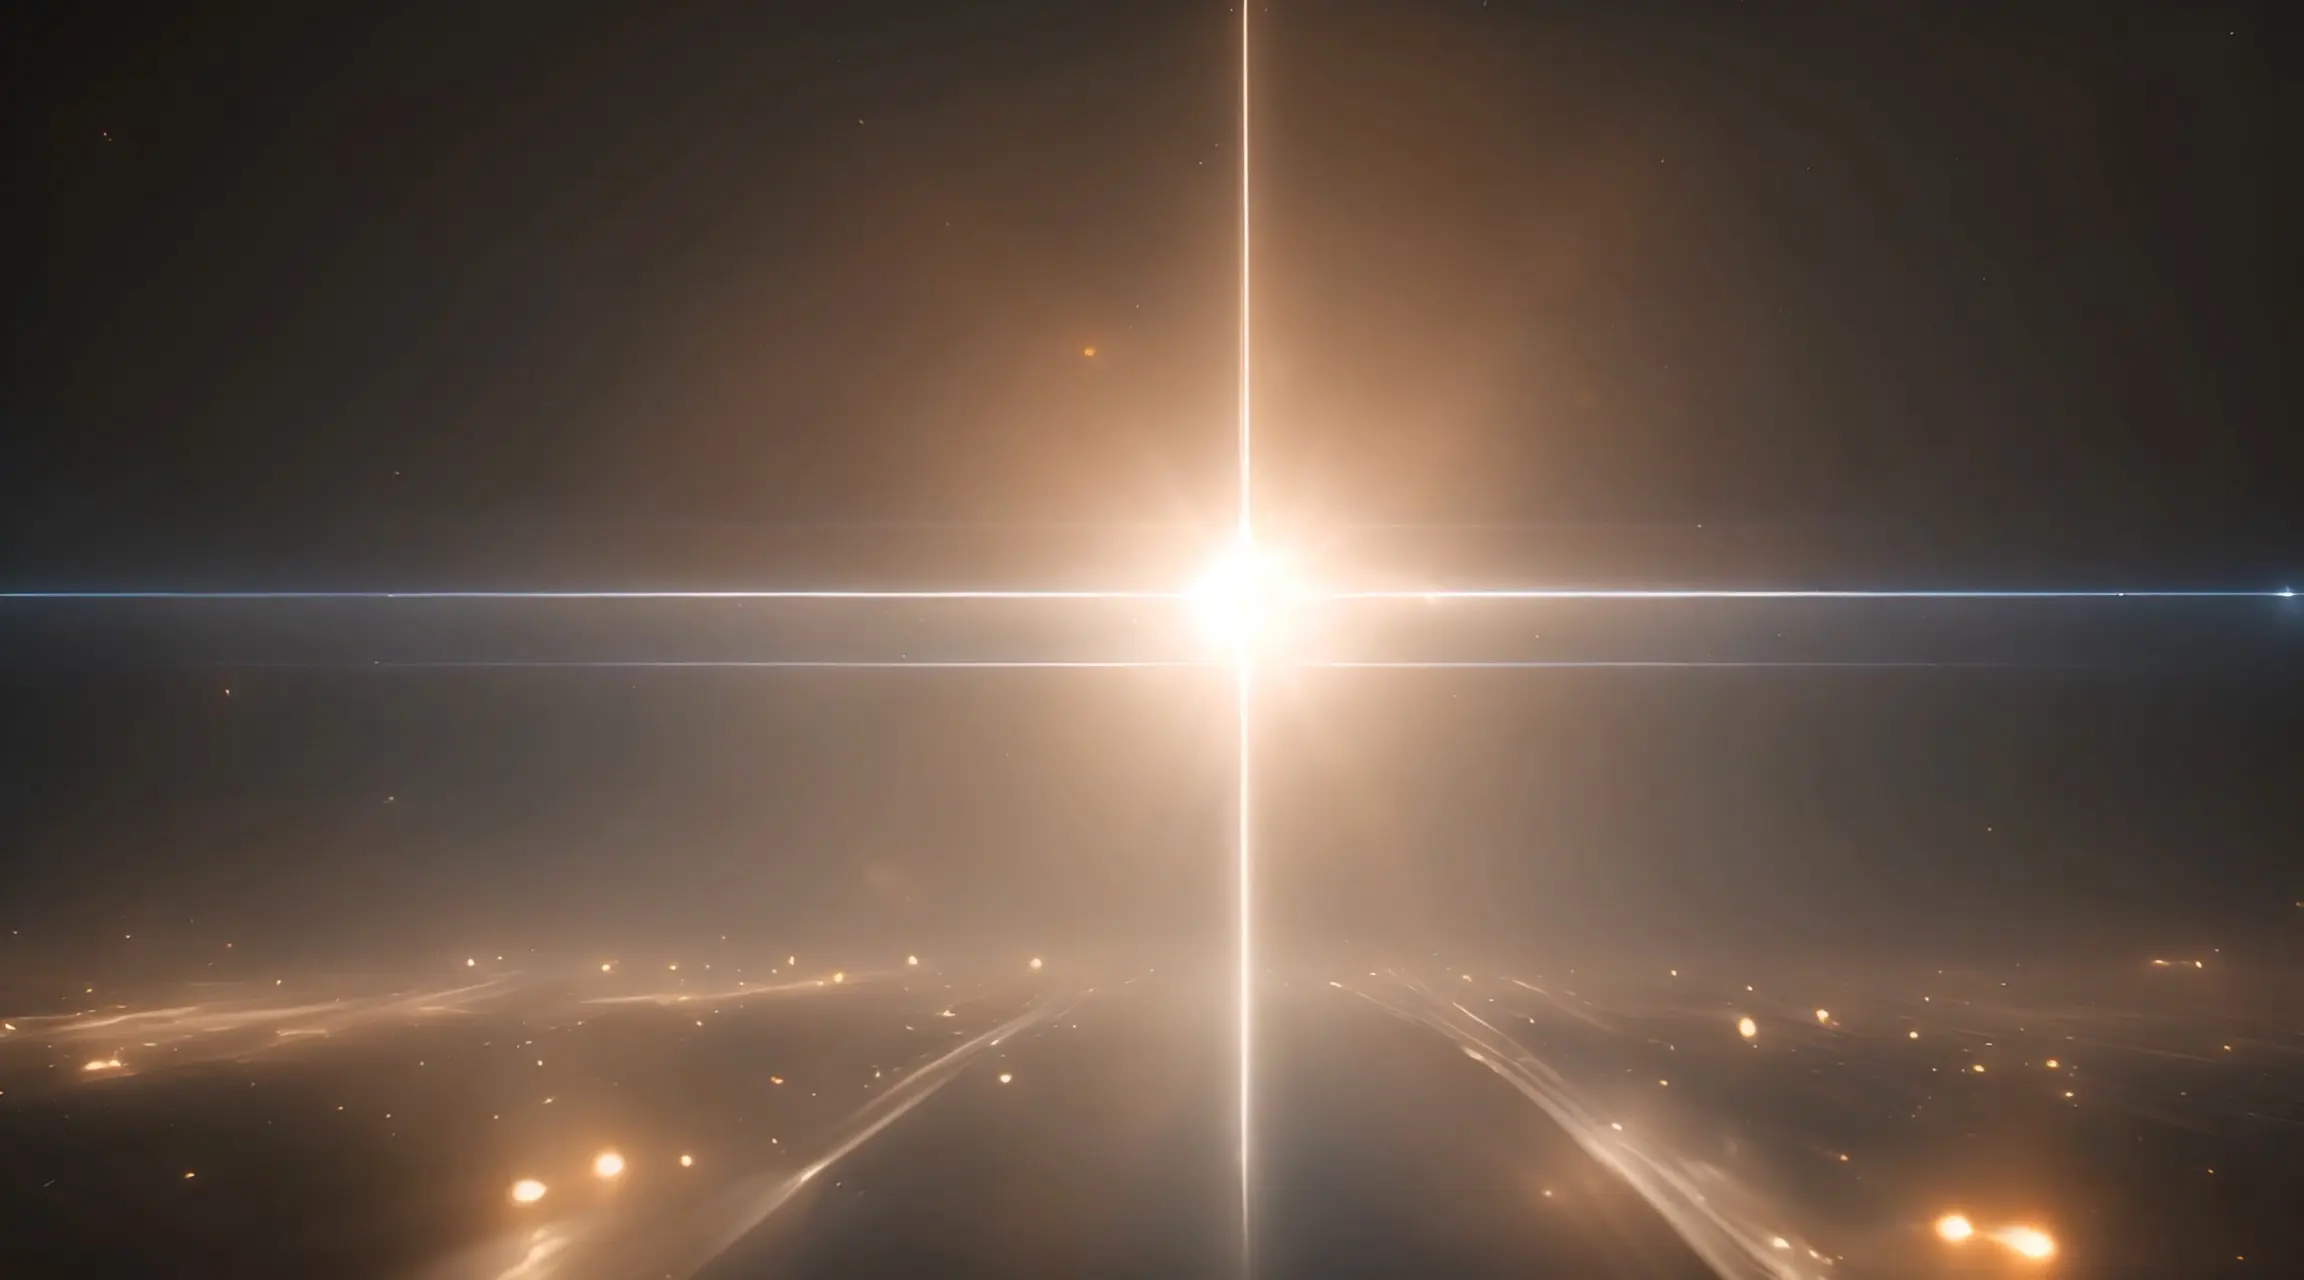 Blazing Light Explosion Vibrant Video Backdrop